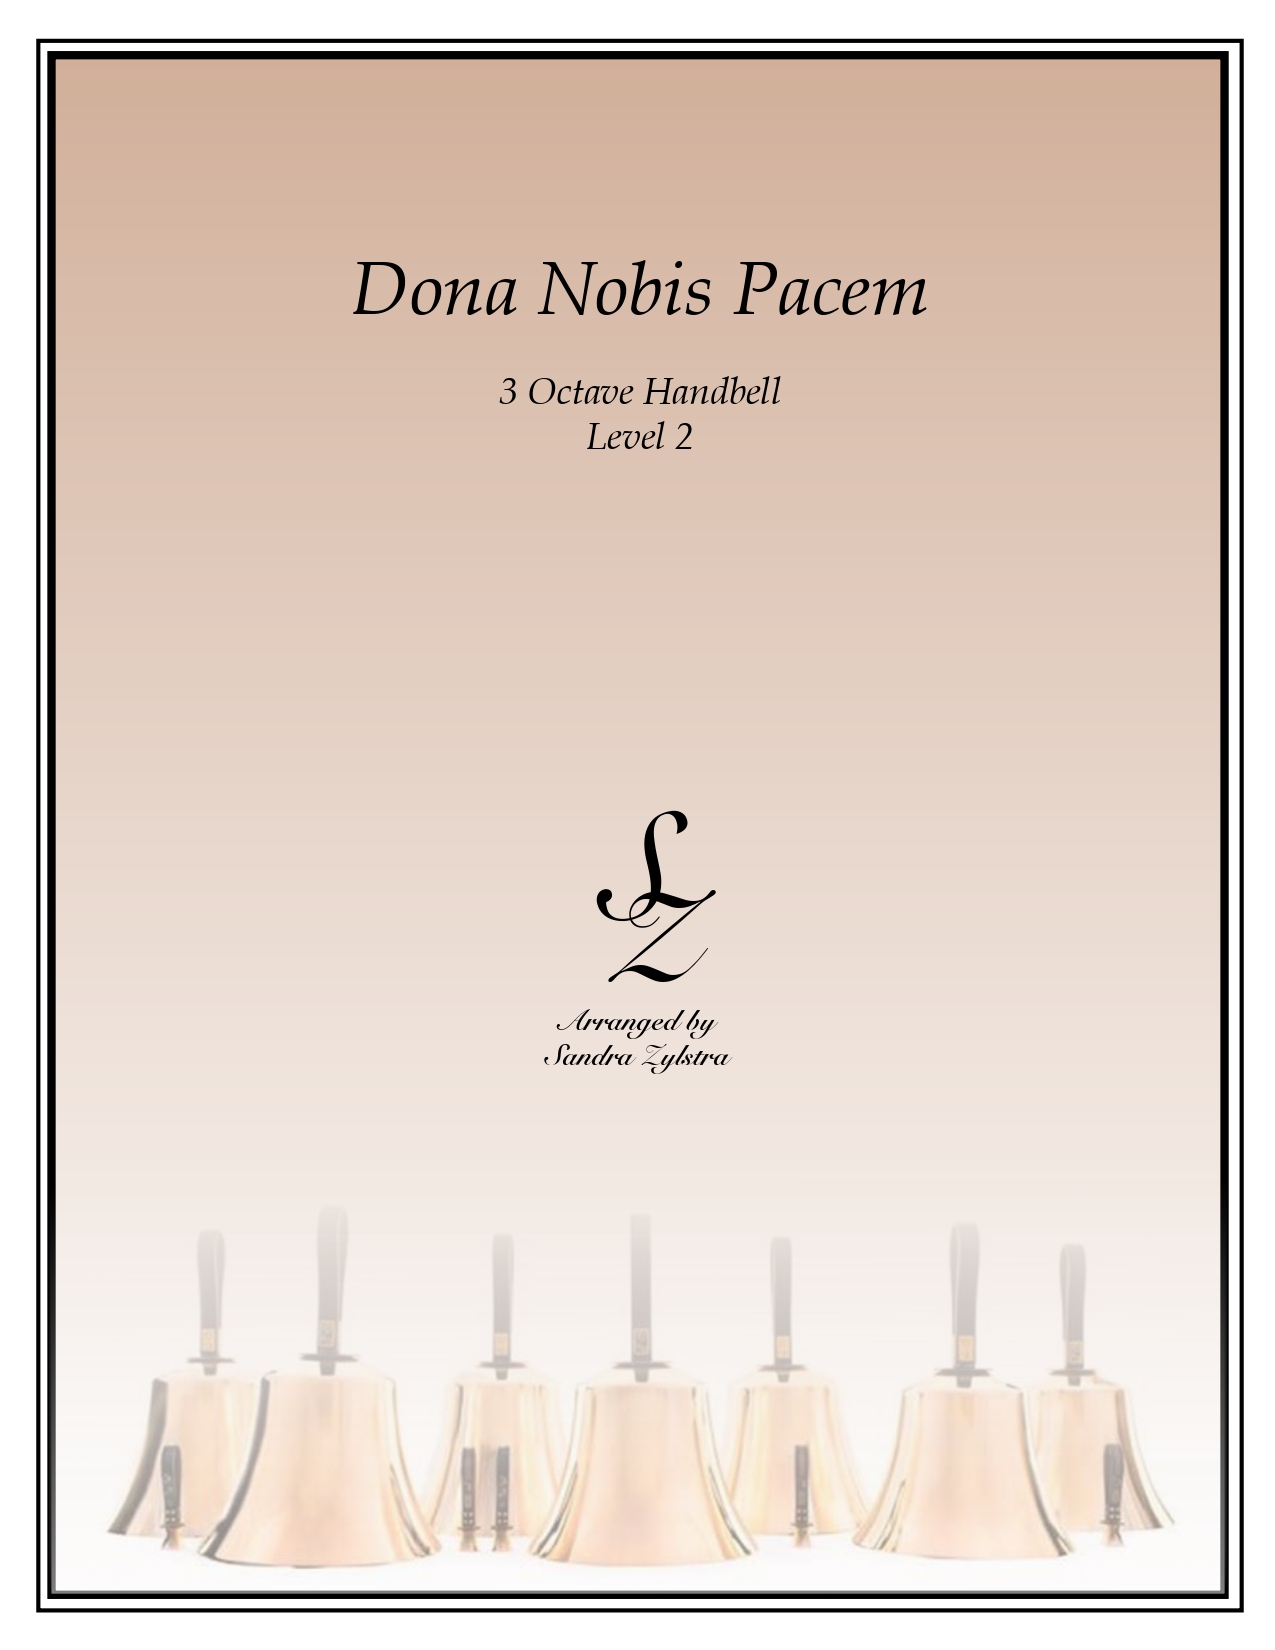 Dona Nobis Pacem 3 octave handbells cover page 00011